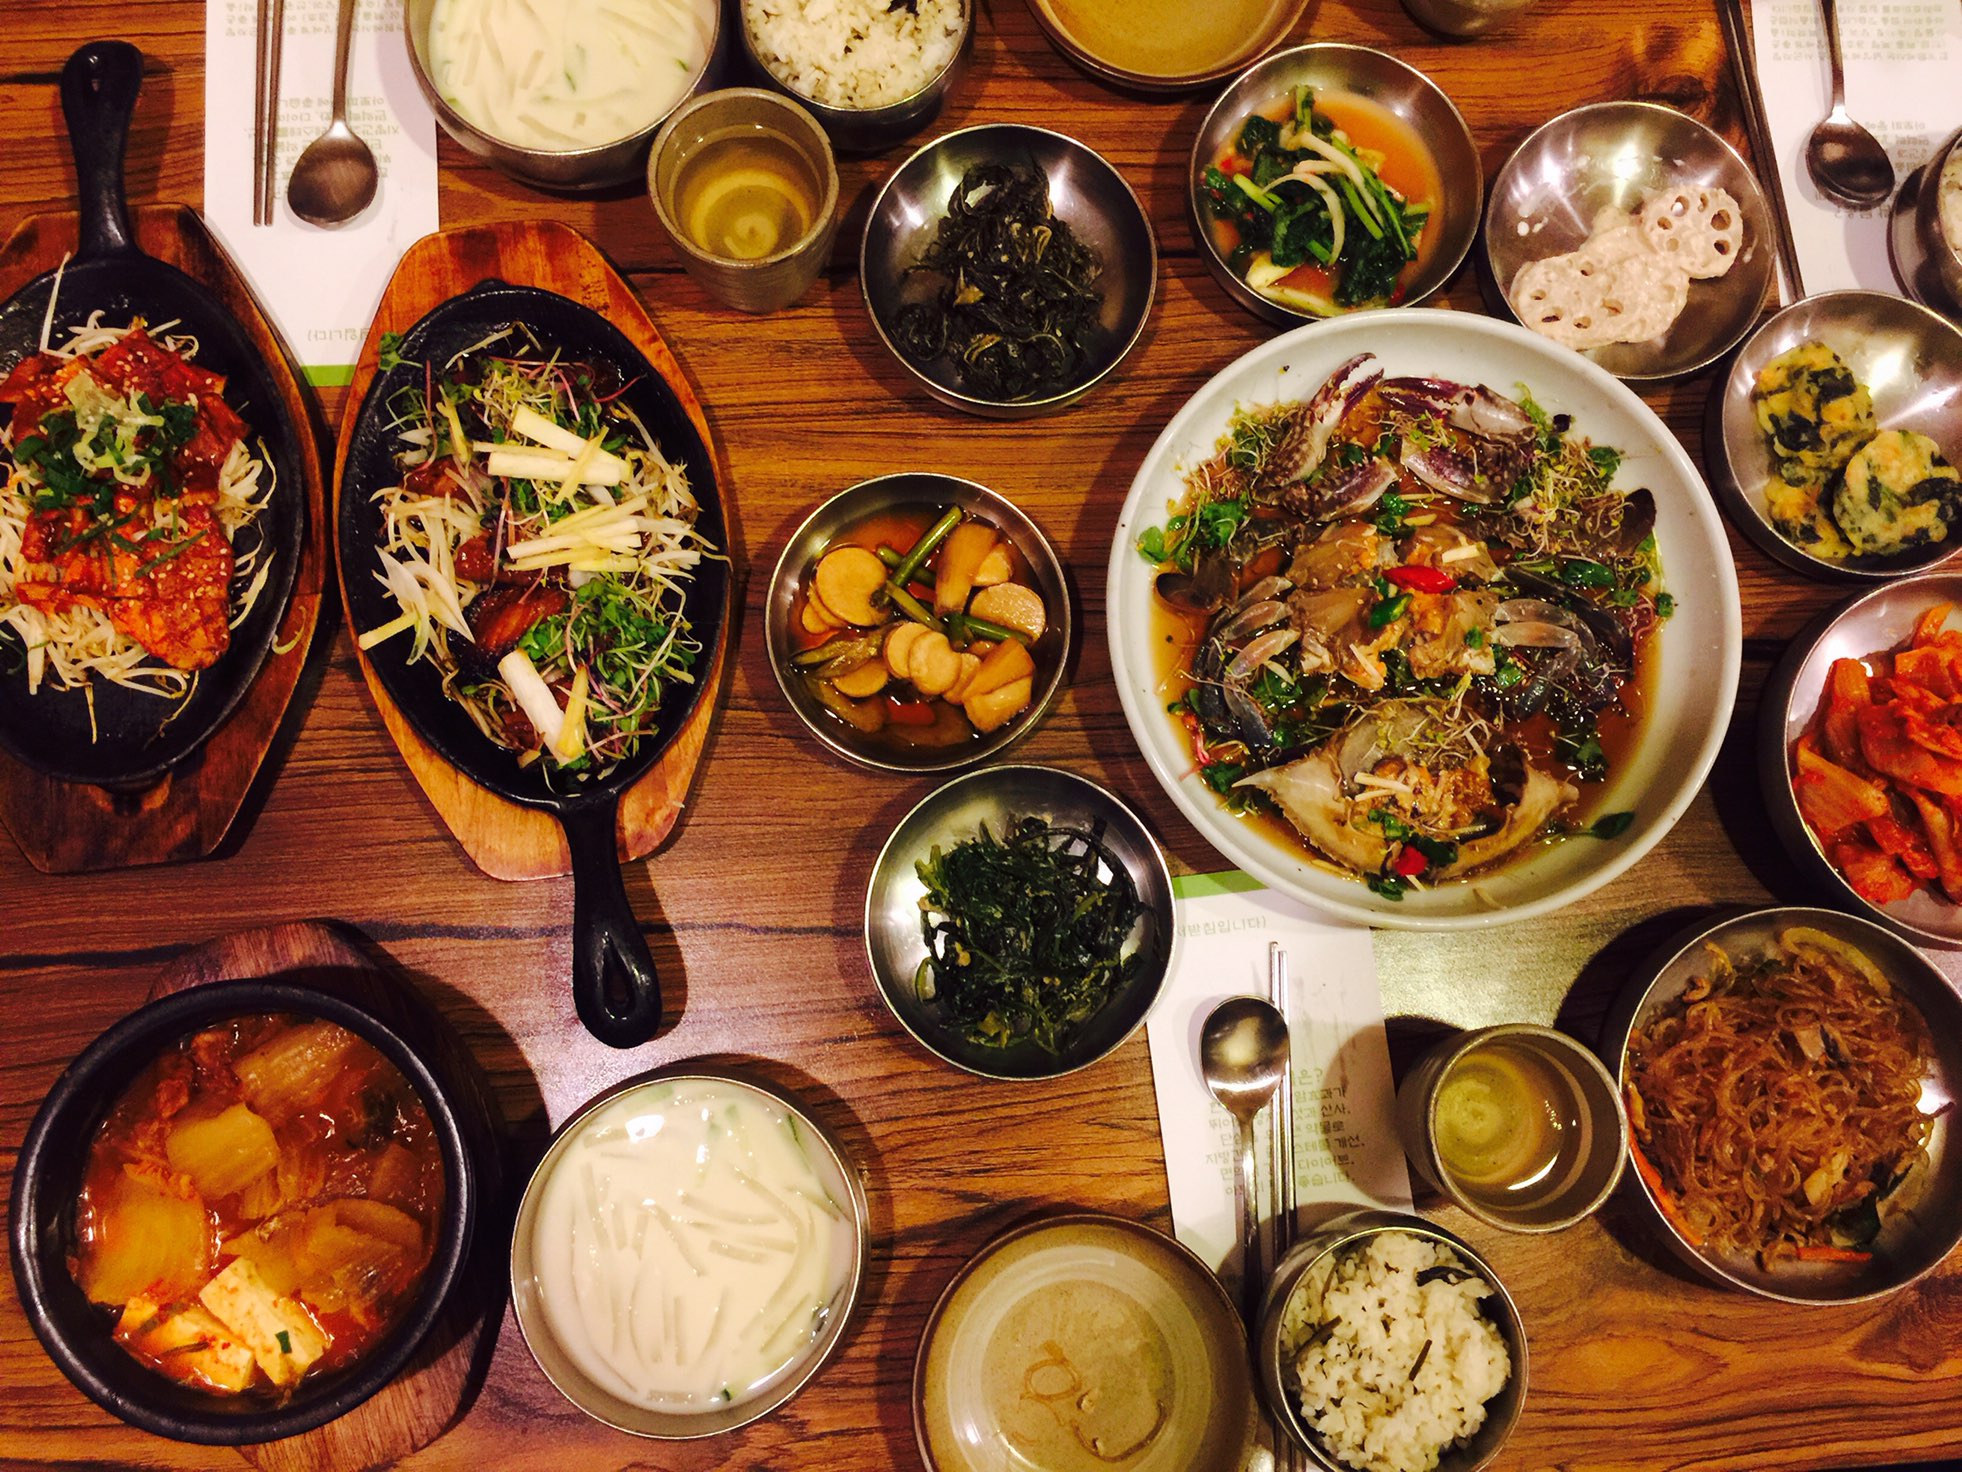 Hangaram mejores restaurantes coreanos en monterrey